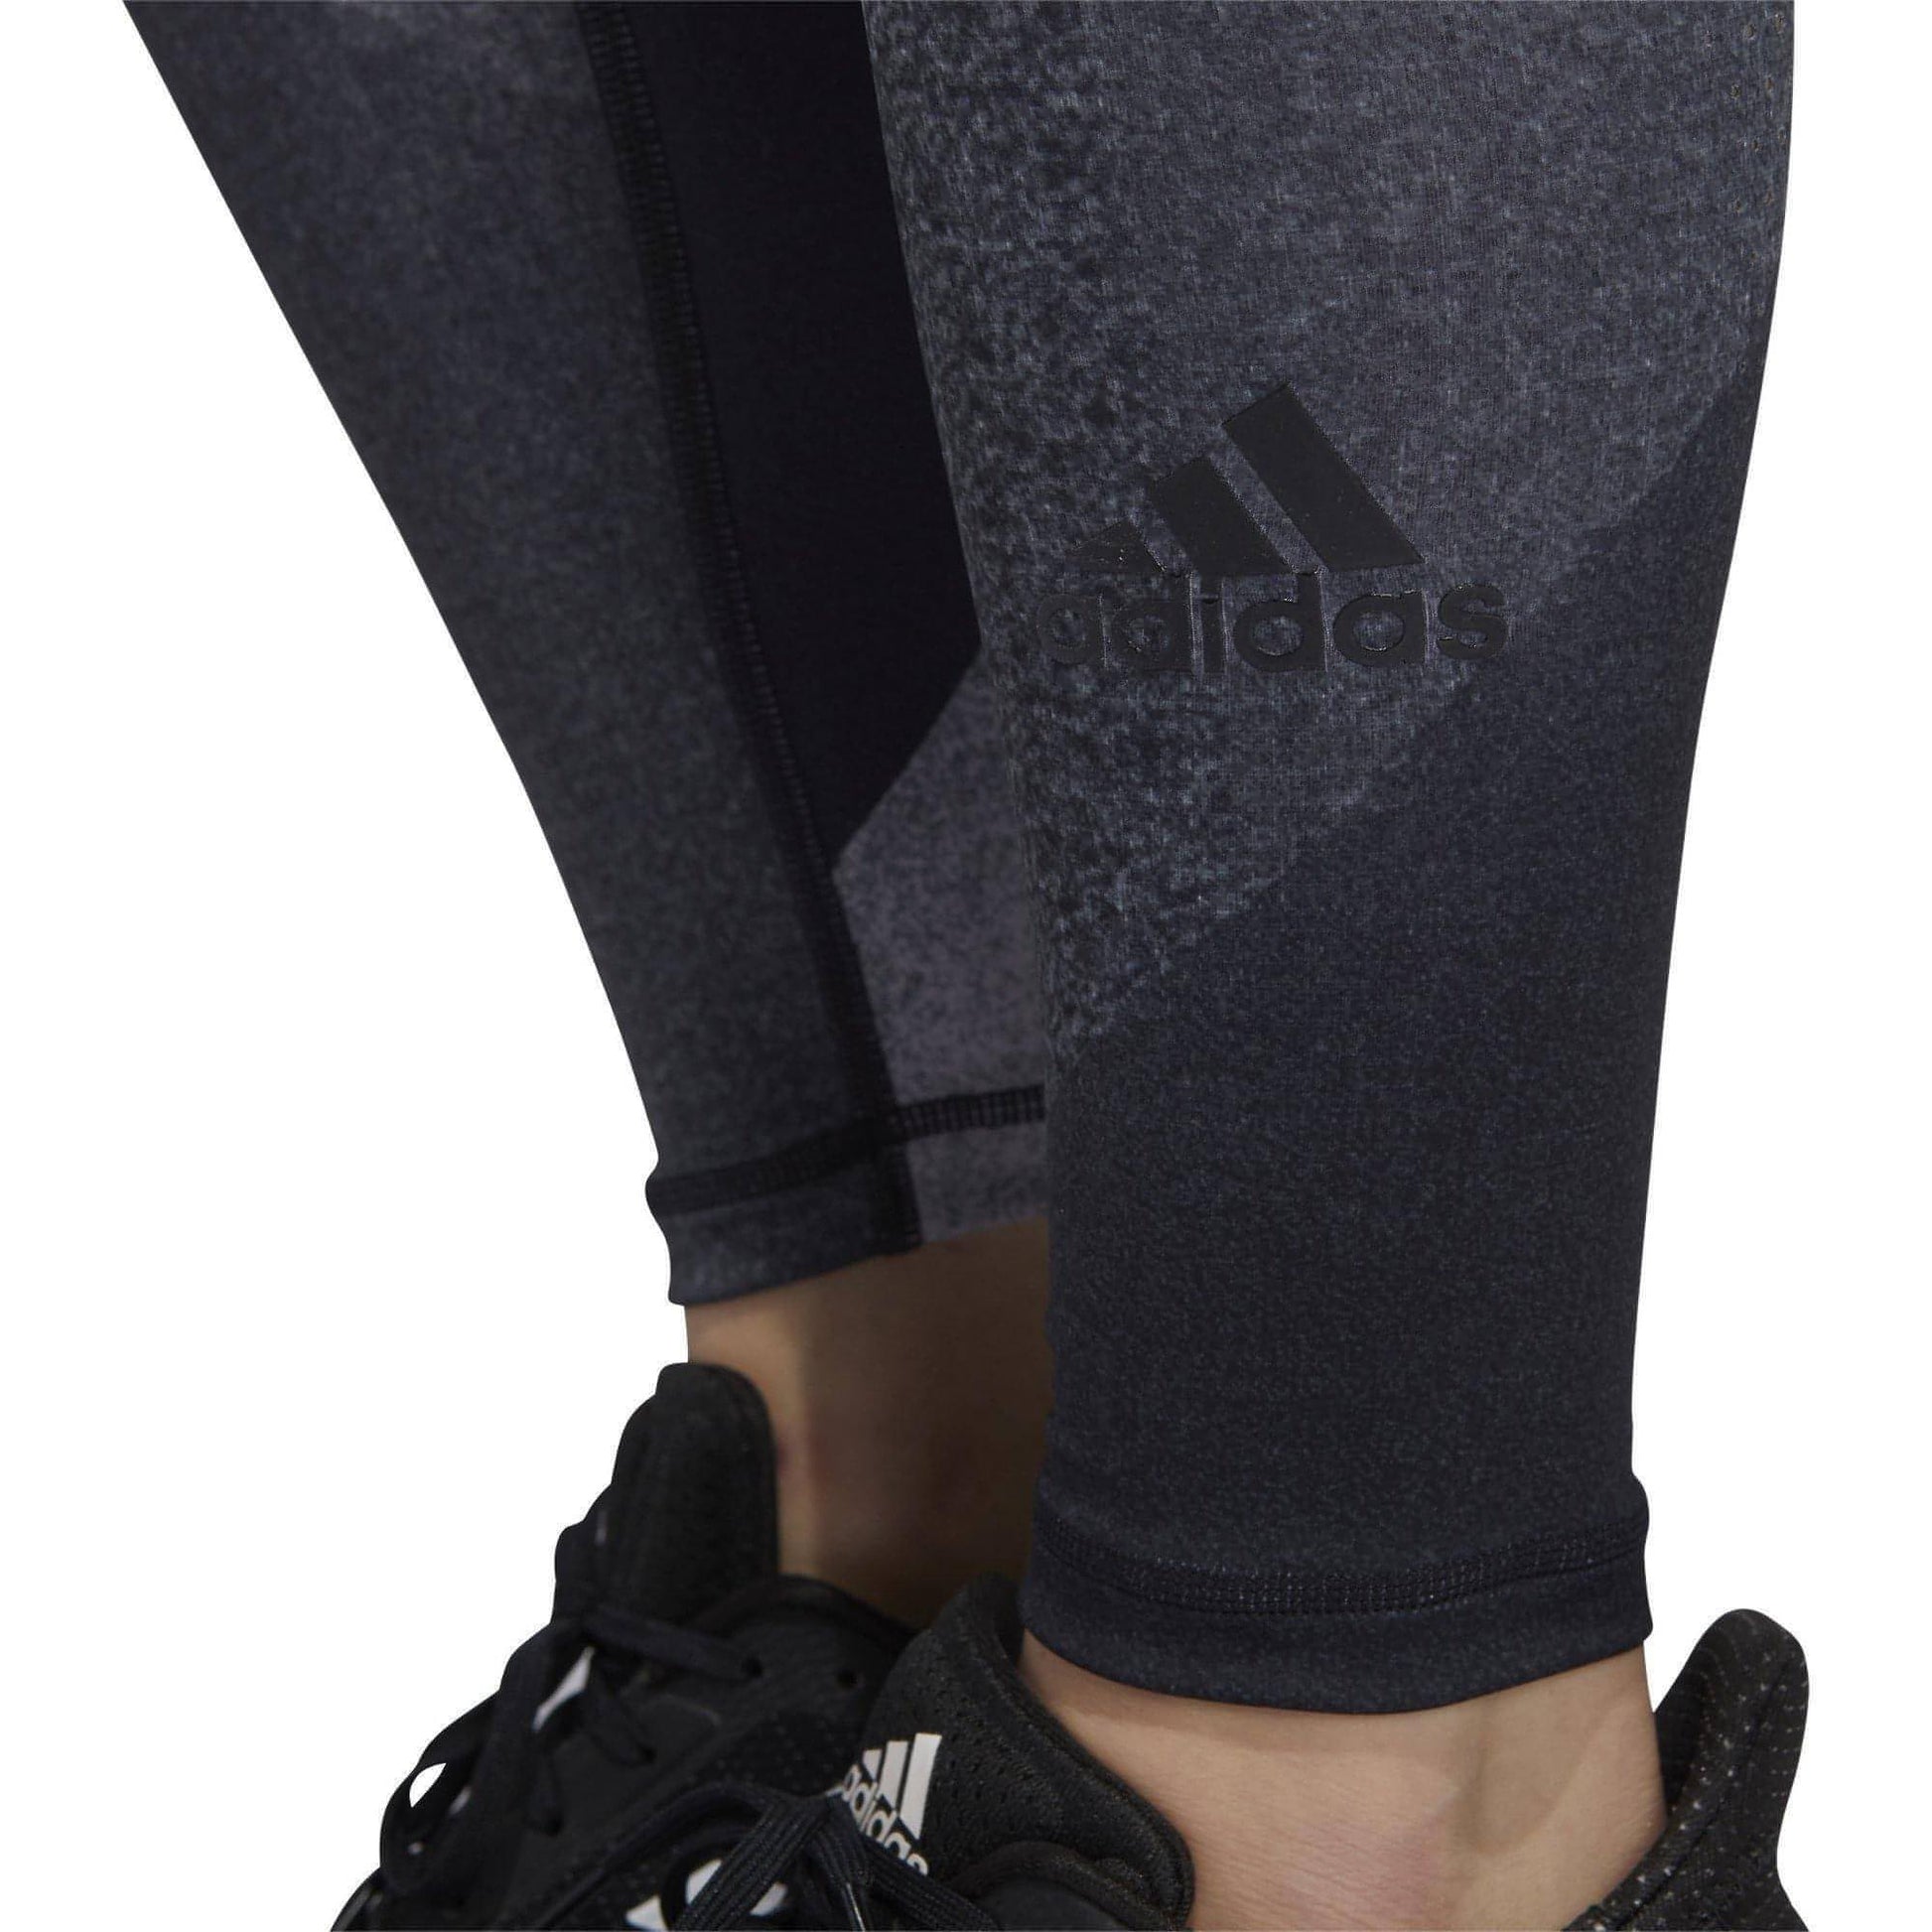 adidas AlphaSkin Graphic Womens Long Training Tights - Grey - Start Fitness